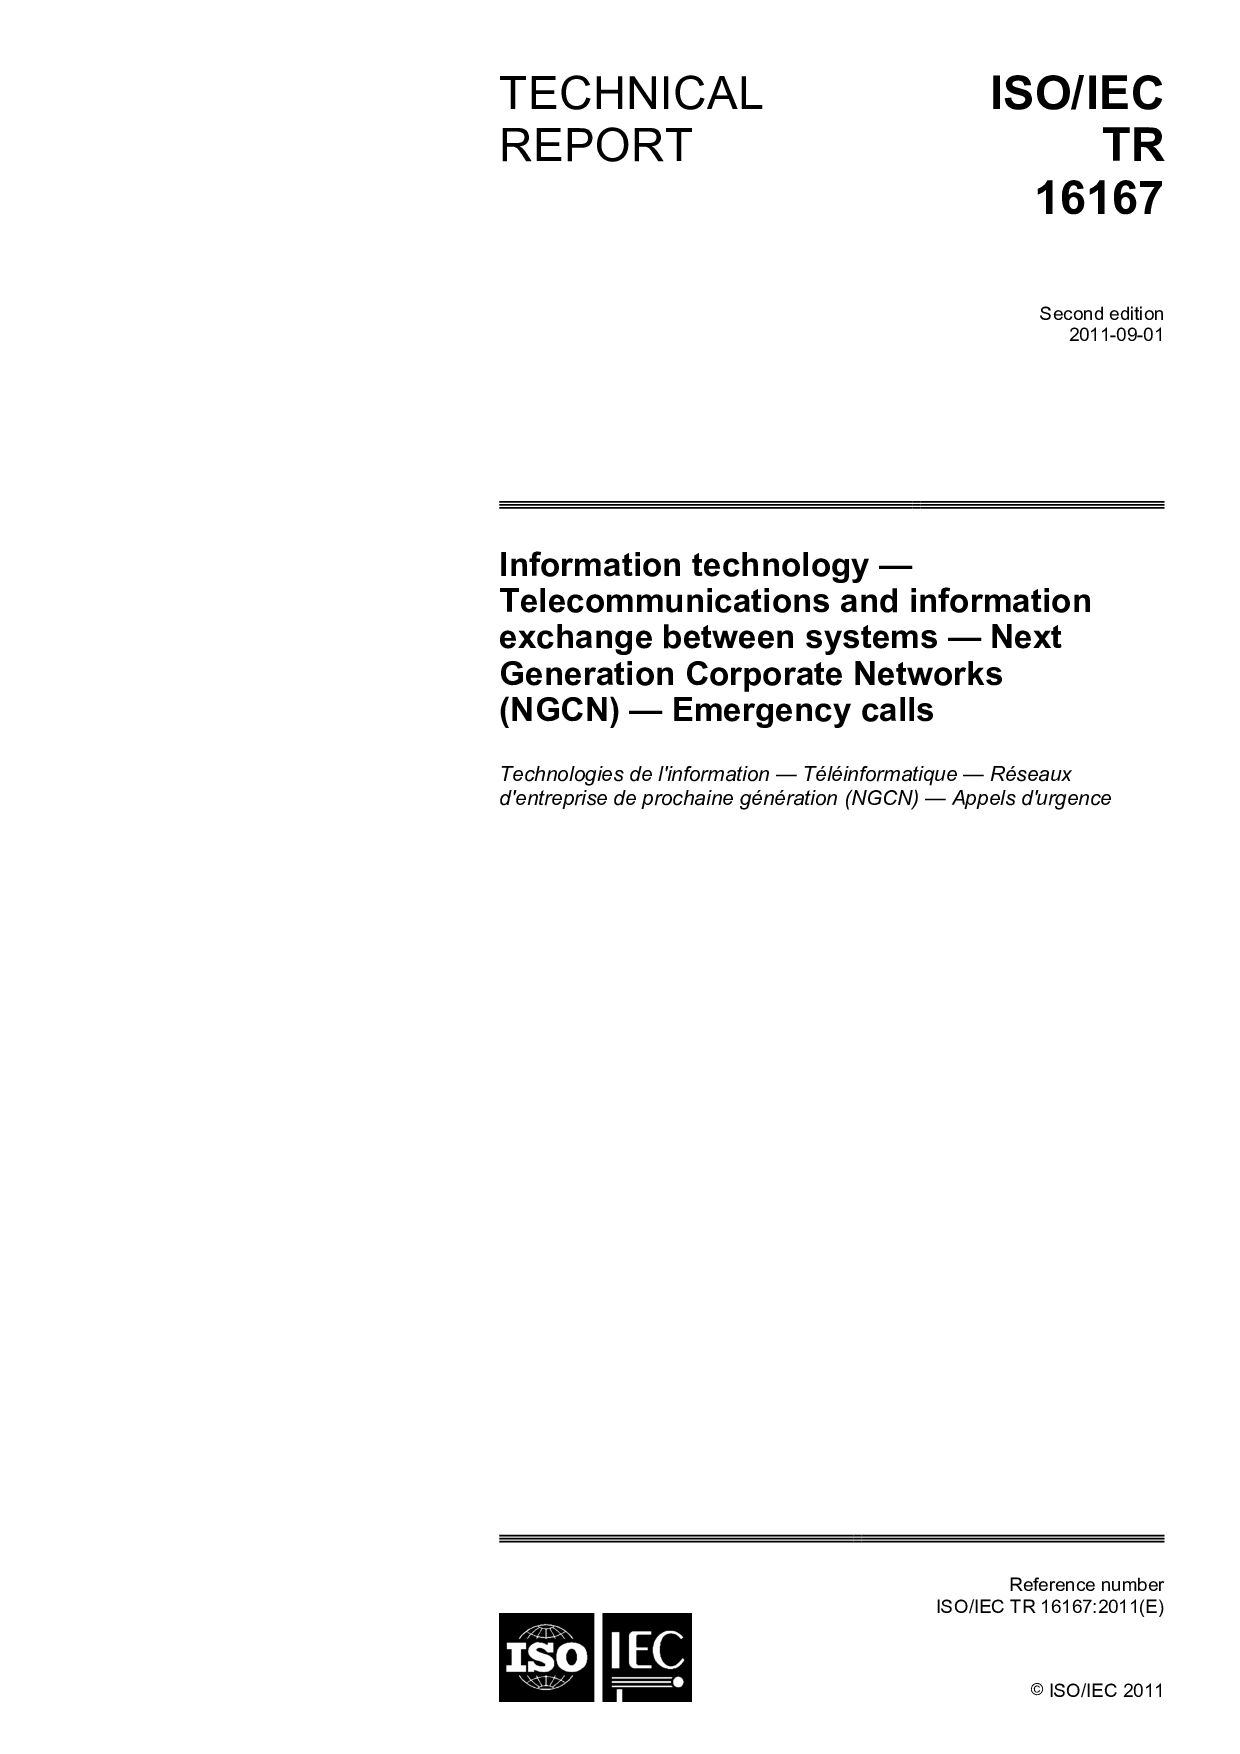 ISO/IEC TR 16167:2011